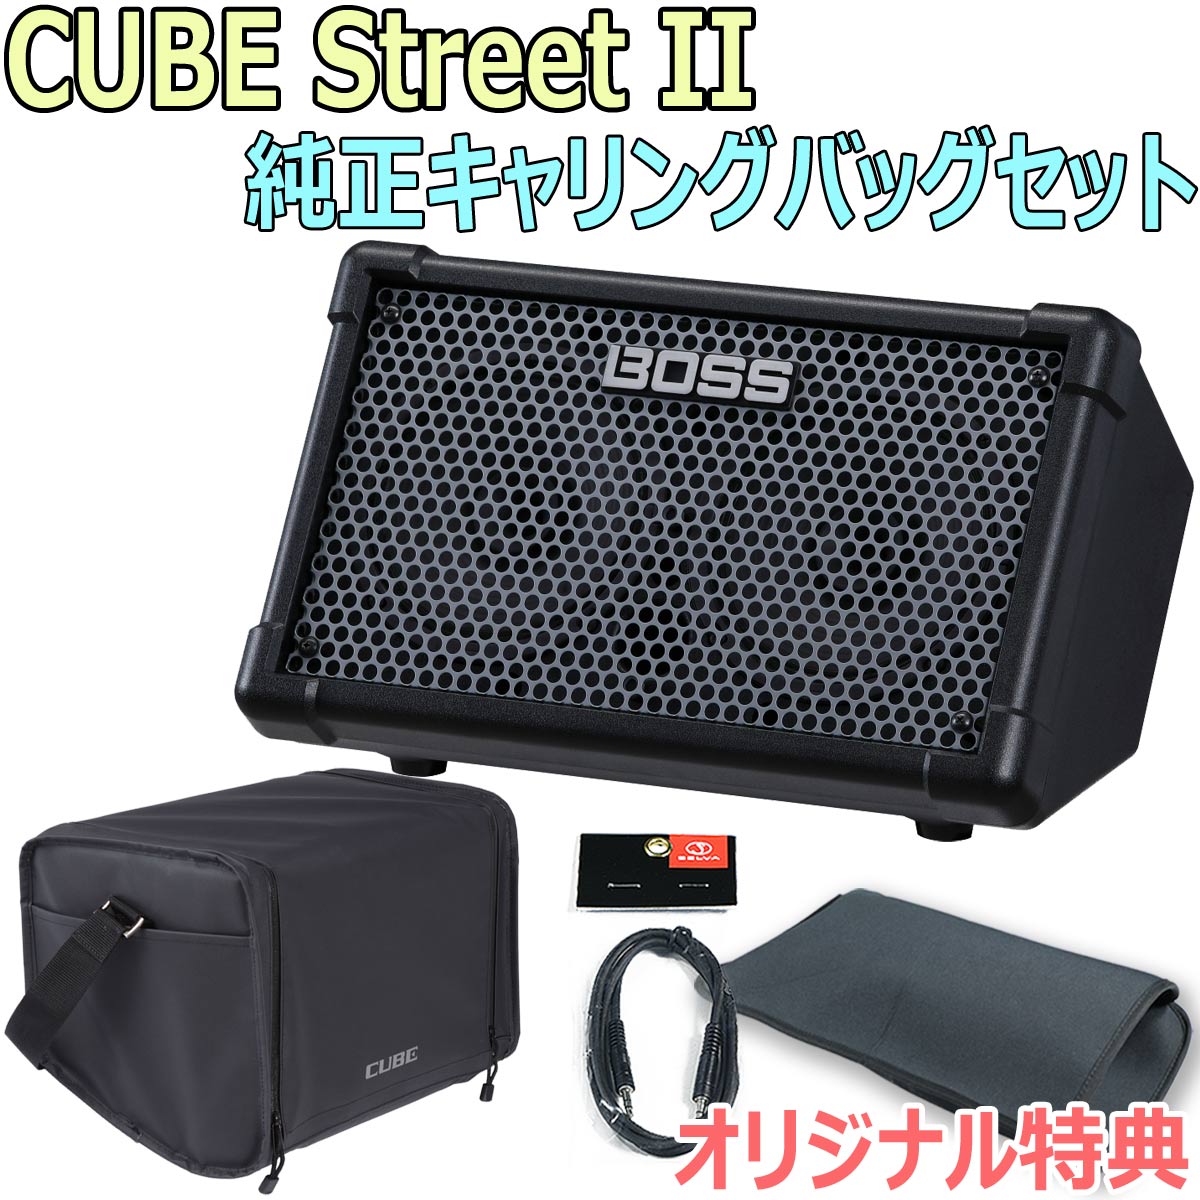 Roland / CUBE Street II Black -純正キャリングバッグセット-【限定